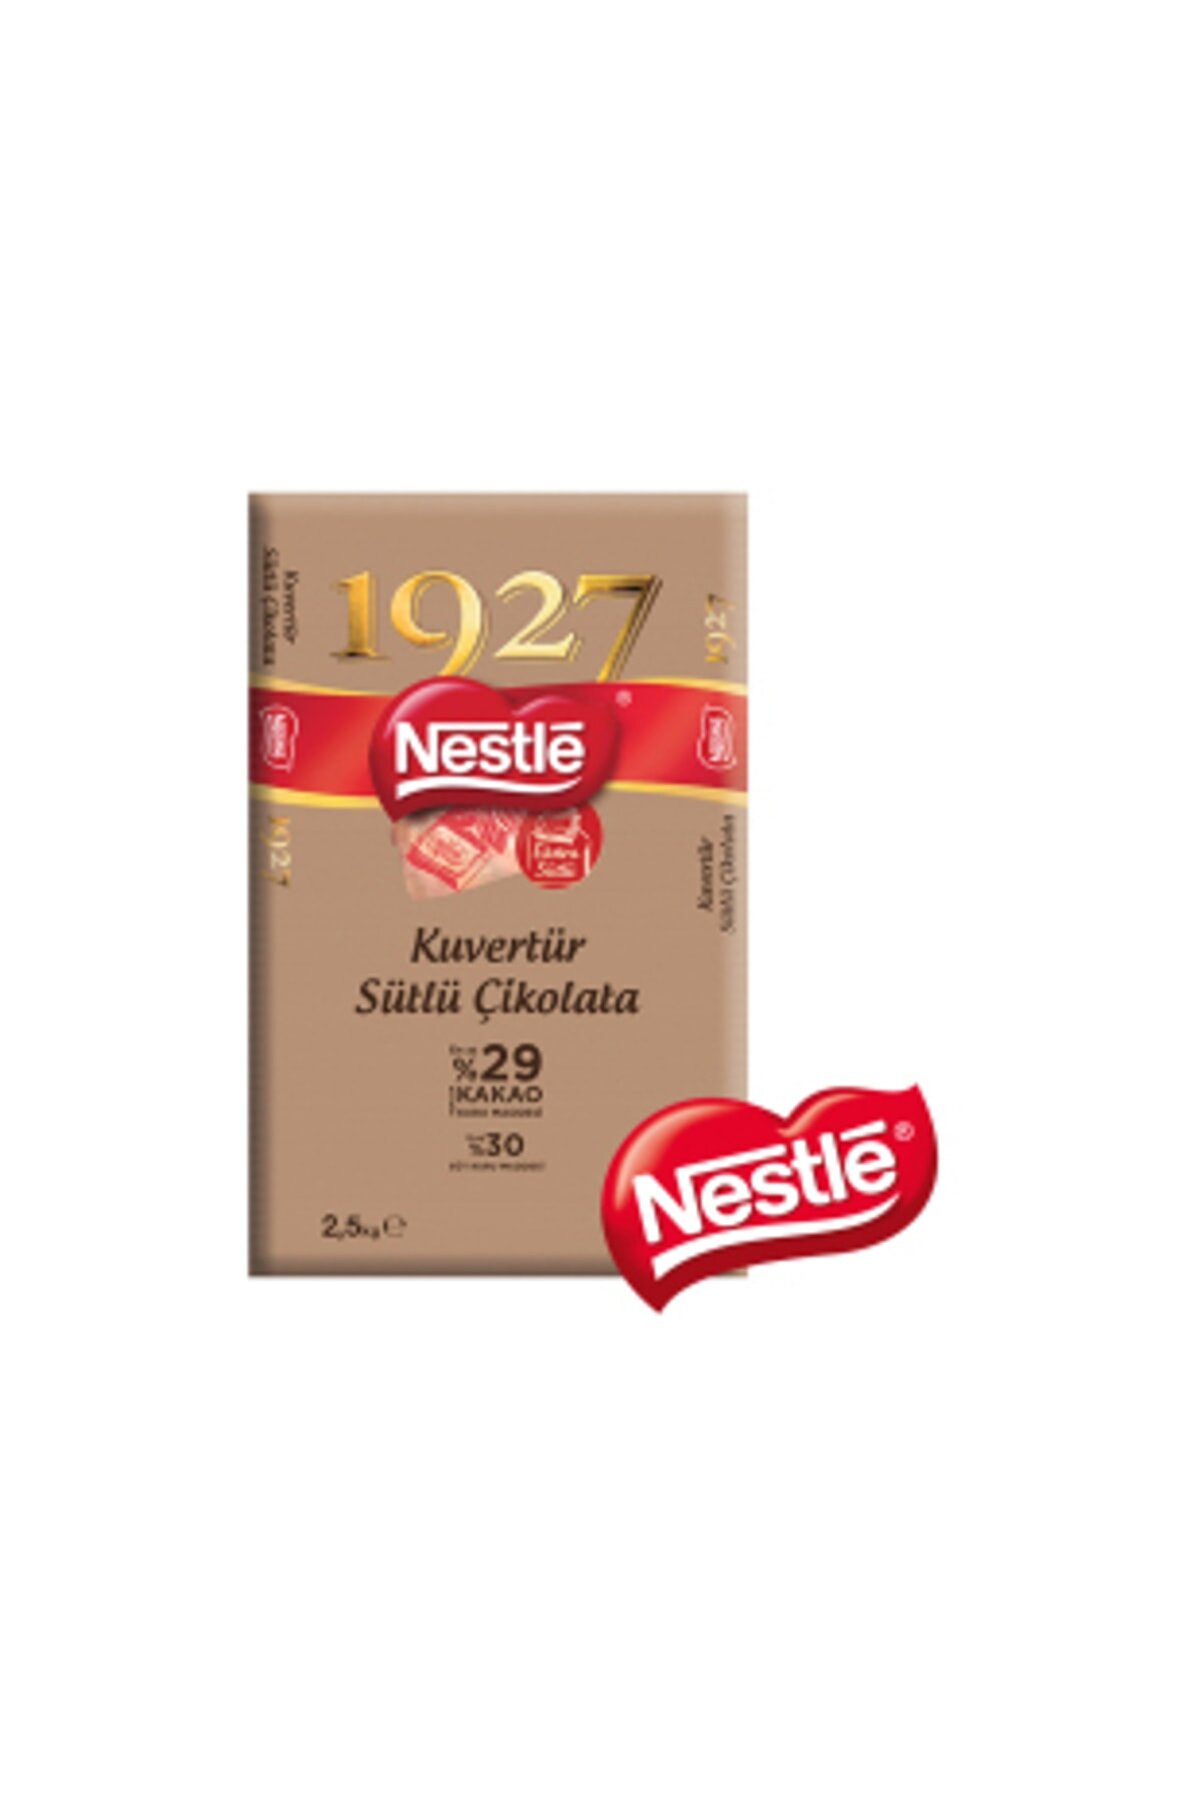 Nestle Nestlé 1927 Kuvertür Sütlü Çikolata 2.5kg